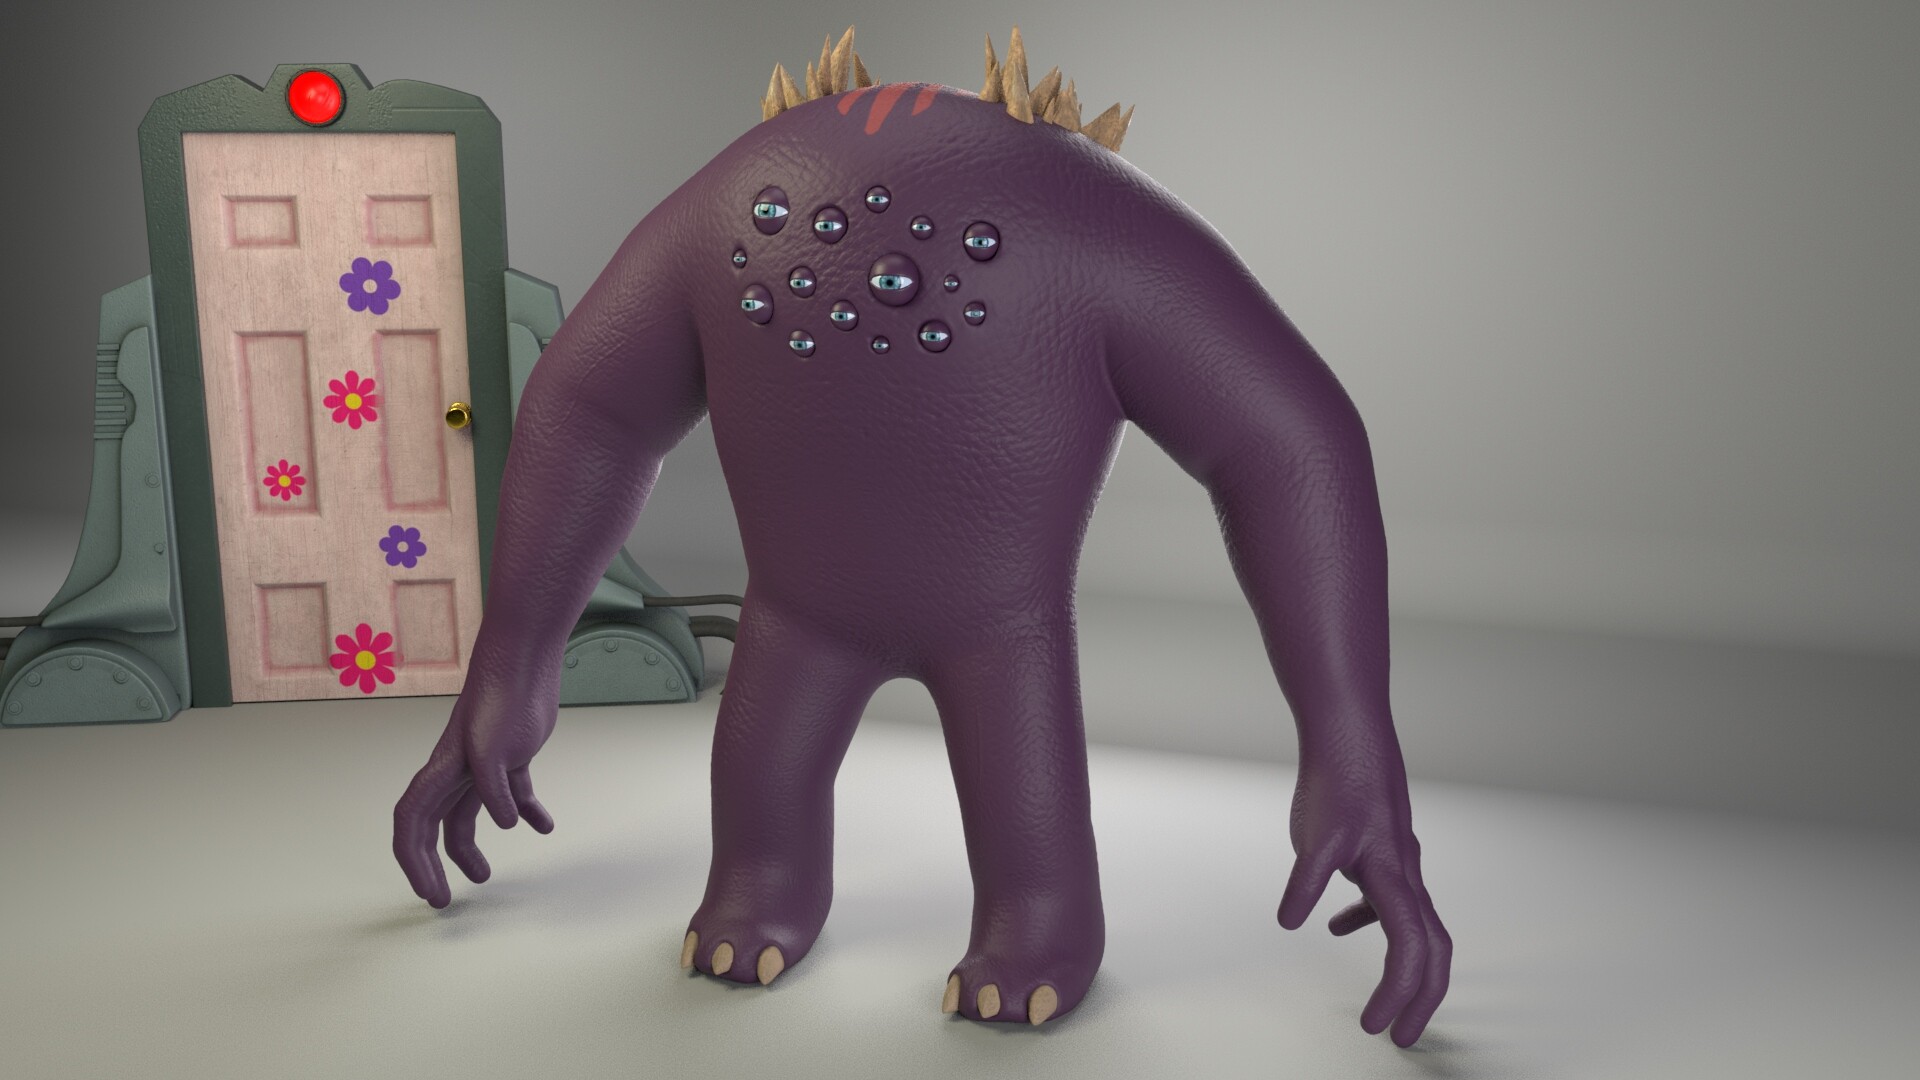 ArtStation - Monsters, Inc. inspired characters